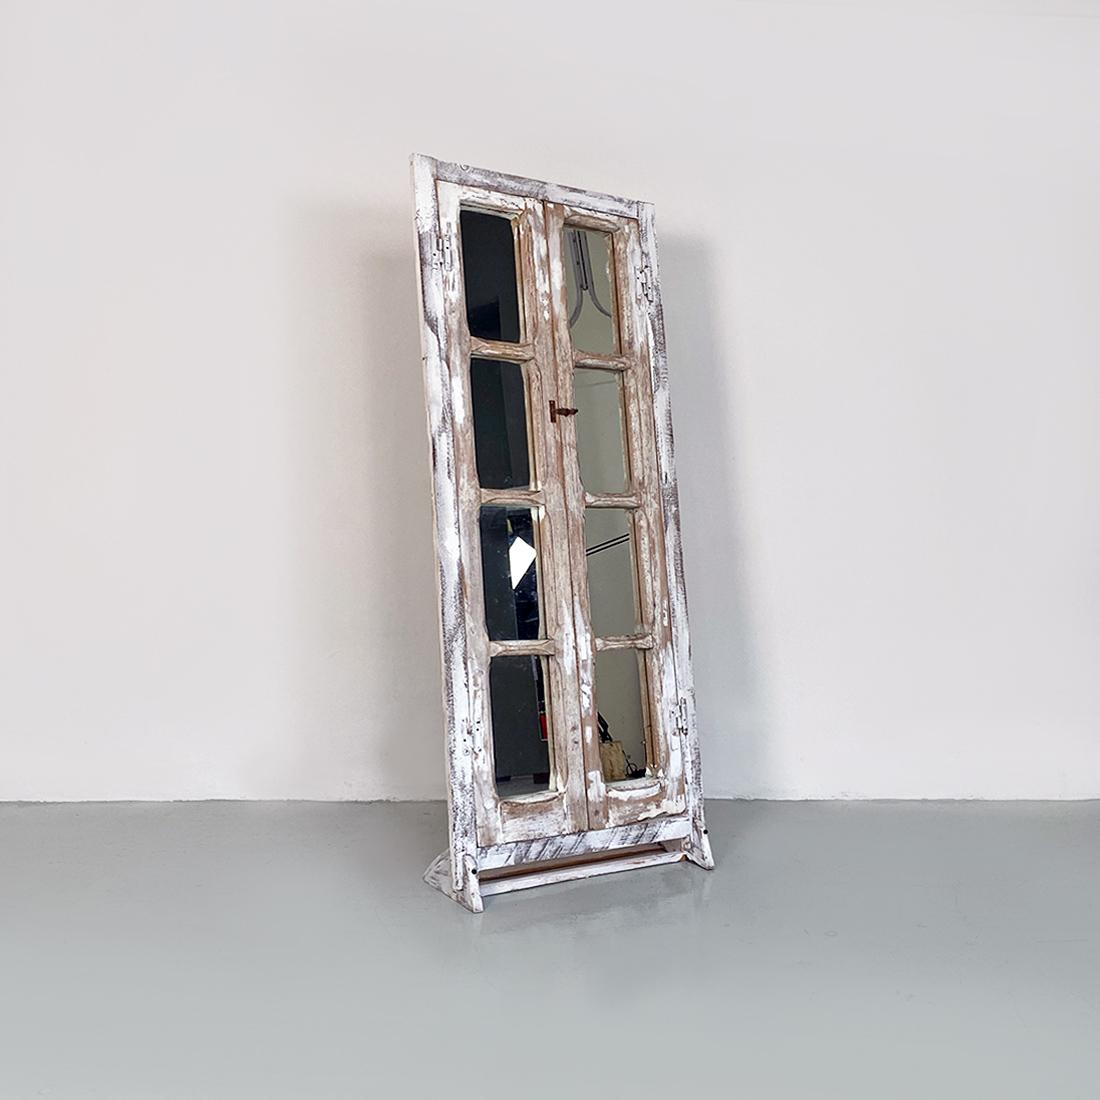 Italian Antique Rustic Freestanding Mirror, Made from a Wooden Swing Door, 1940s For Sale 2